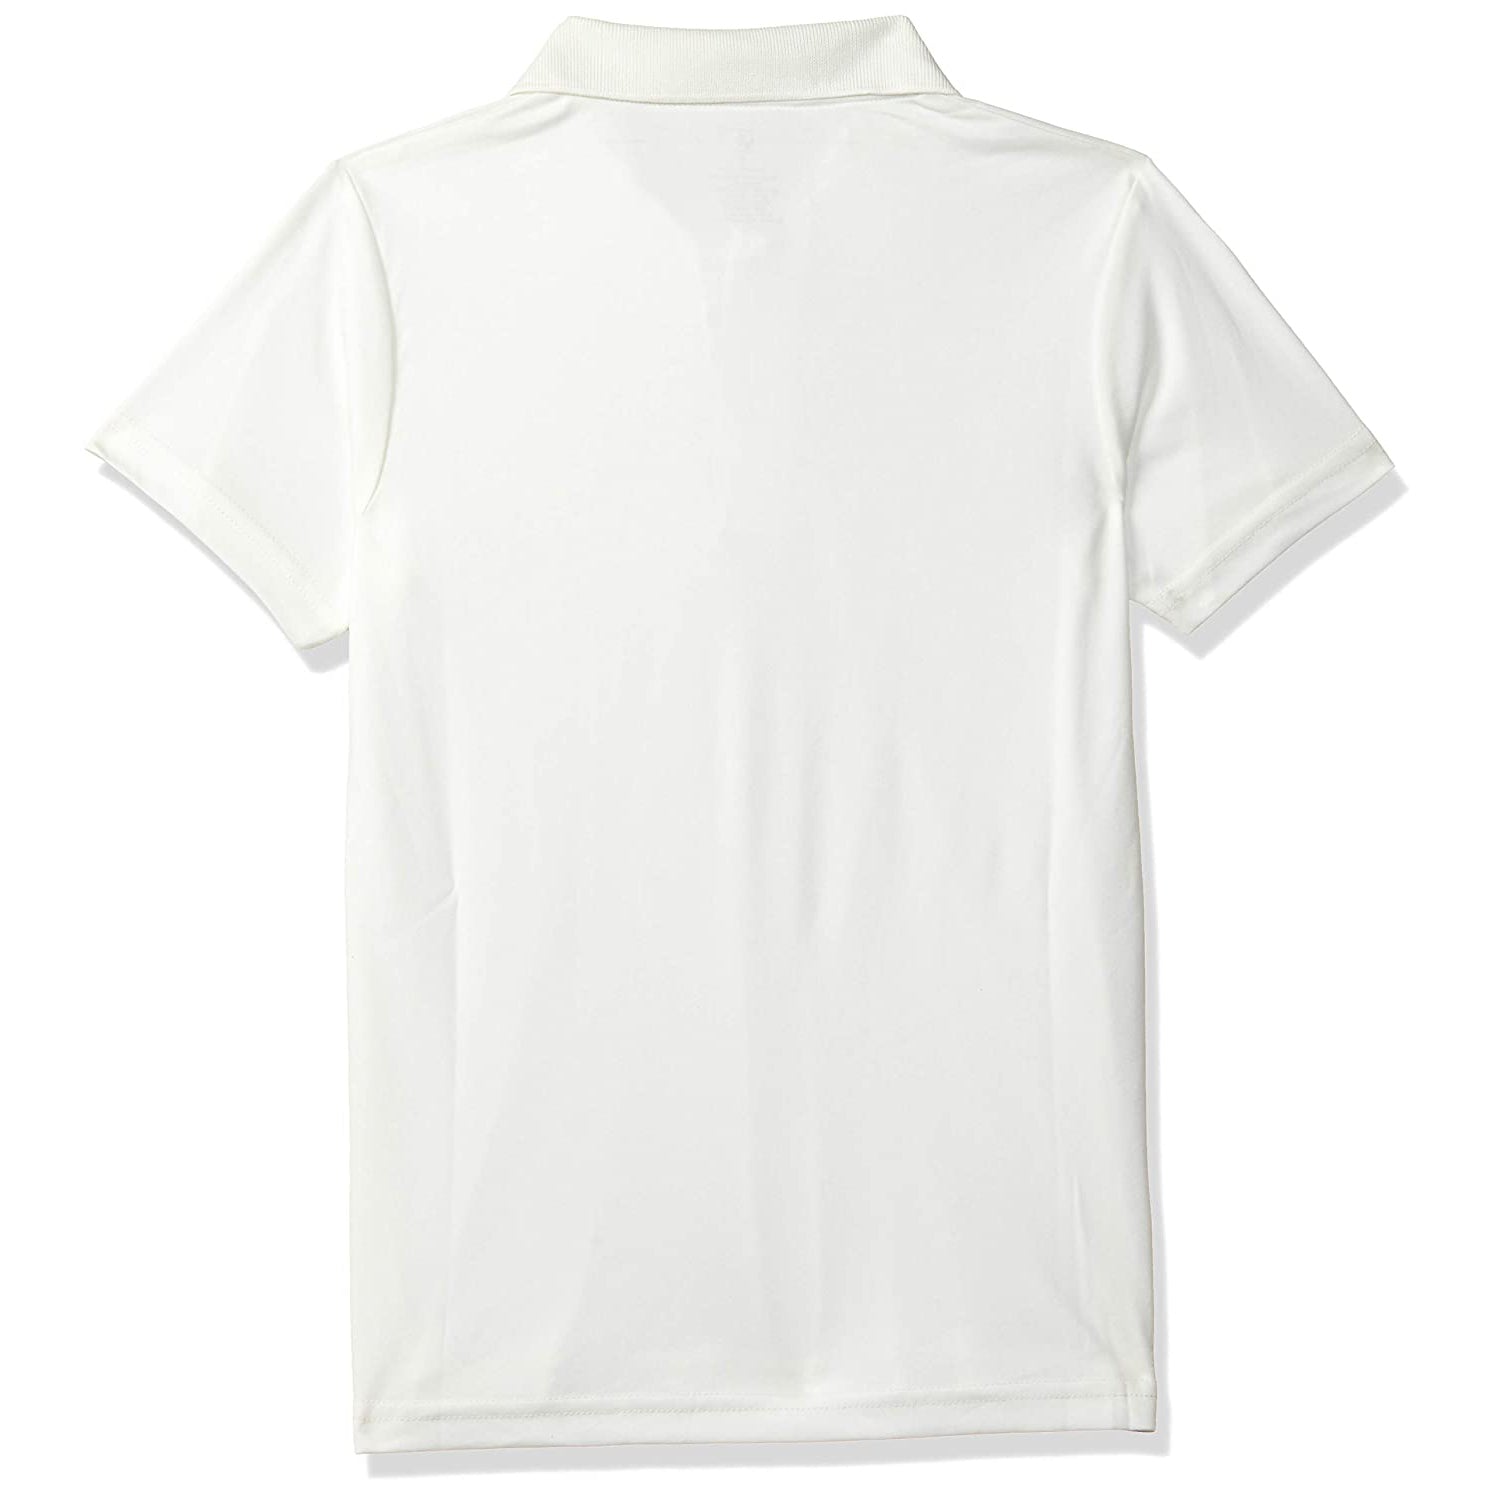 SG Club Half Sleeves Cricket T-shirts for Juniors - Best Price online Prokicksports.com